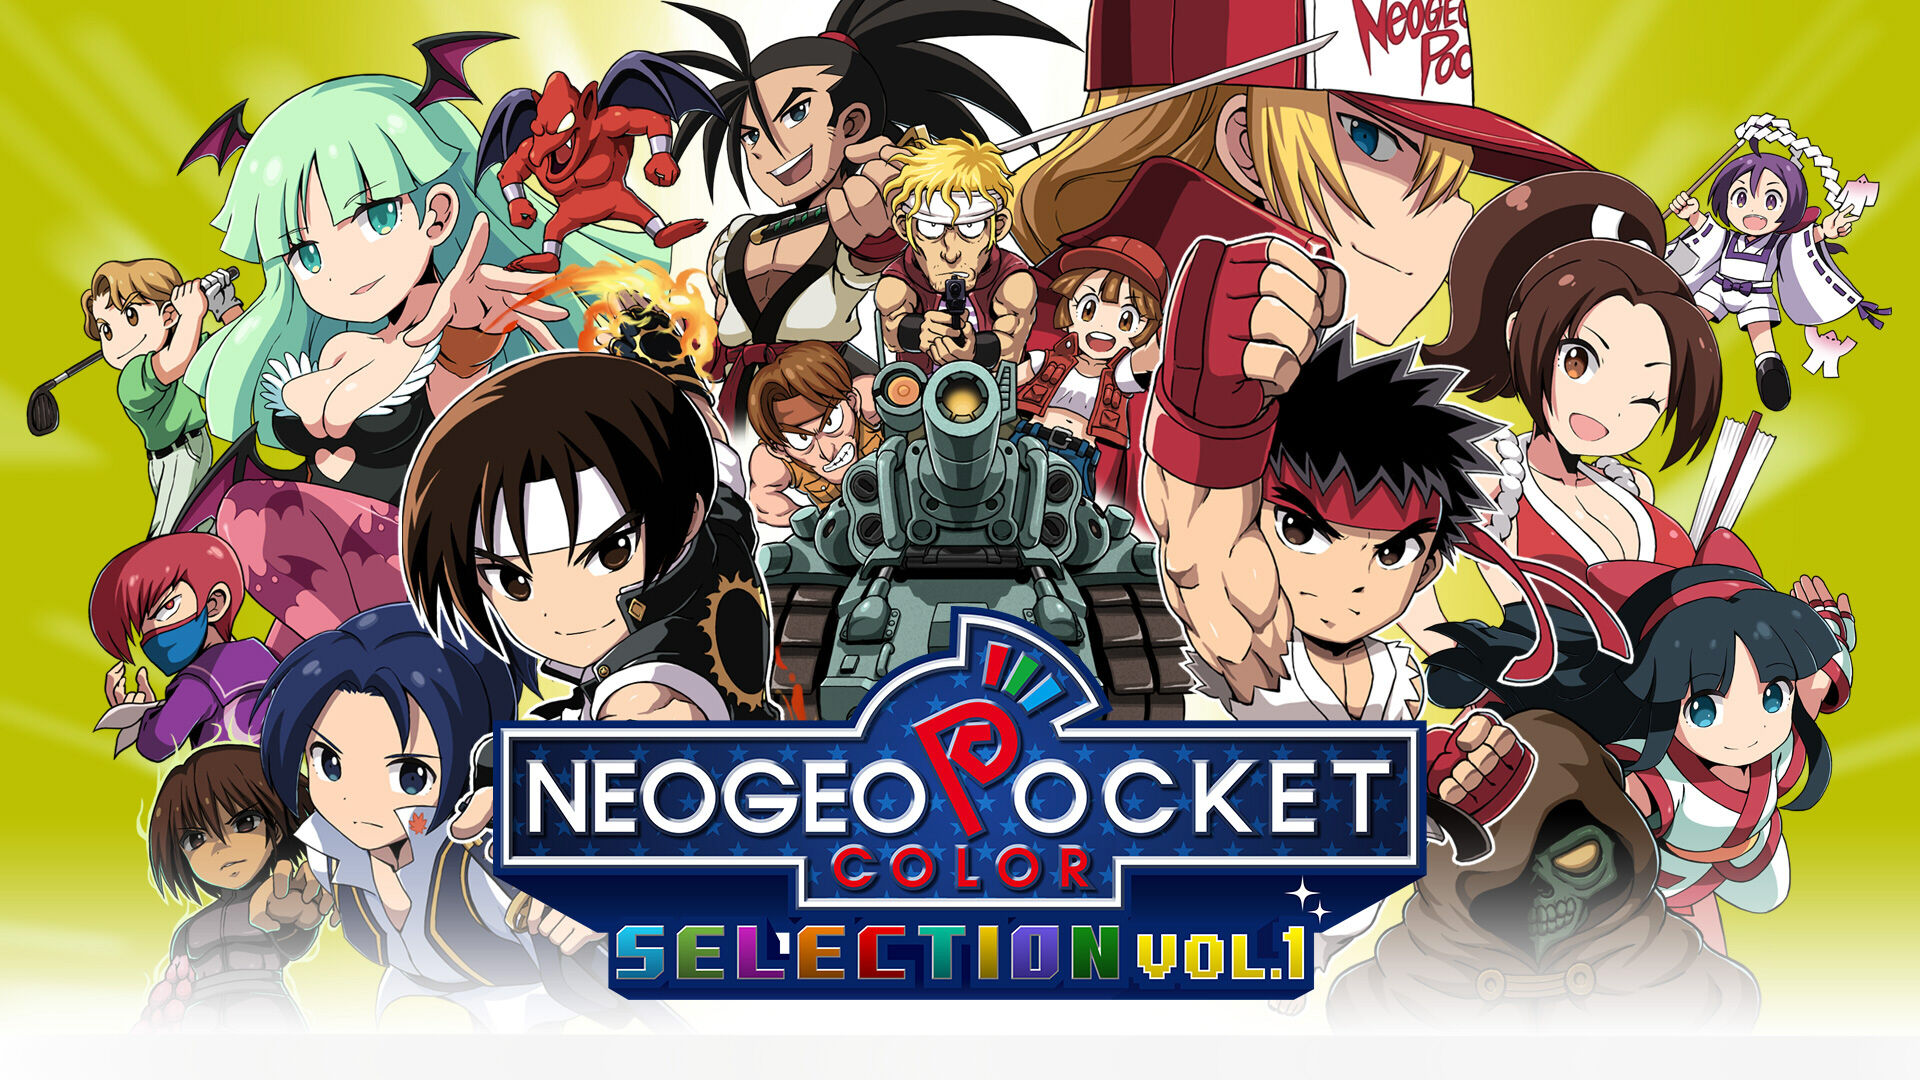 SW ネオジオポケットカラー セレクション Vol.1 / Neo Geo Po